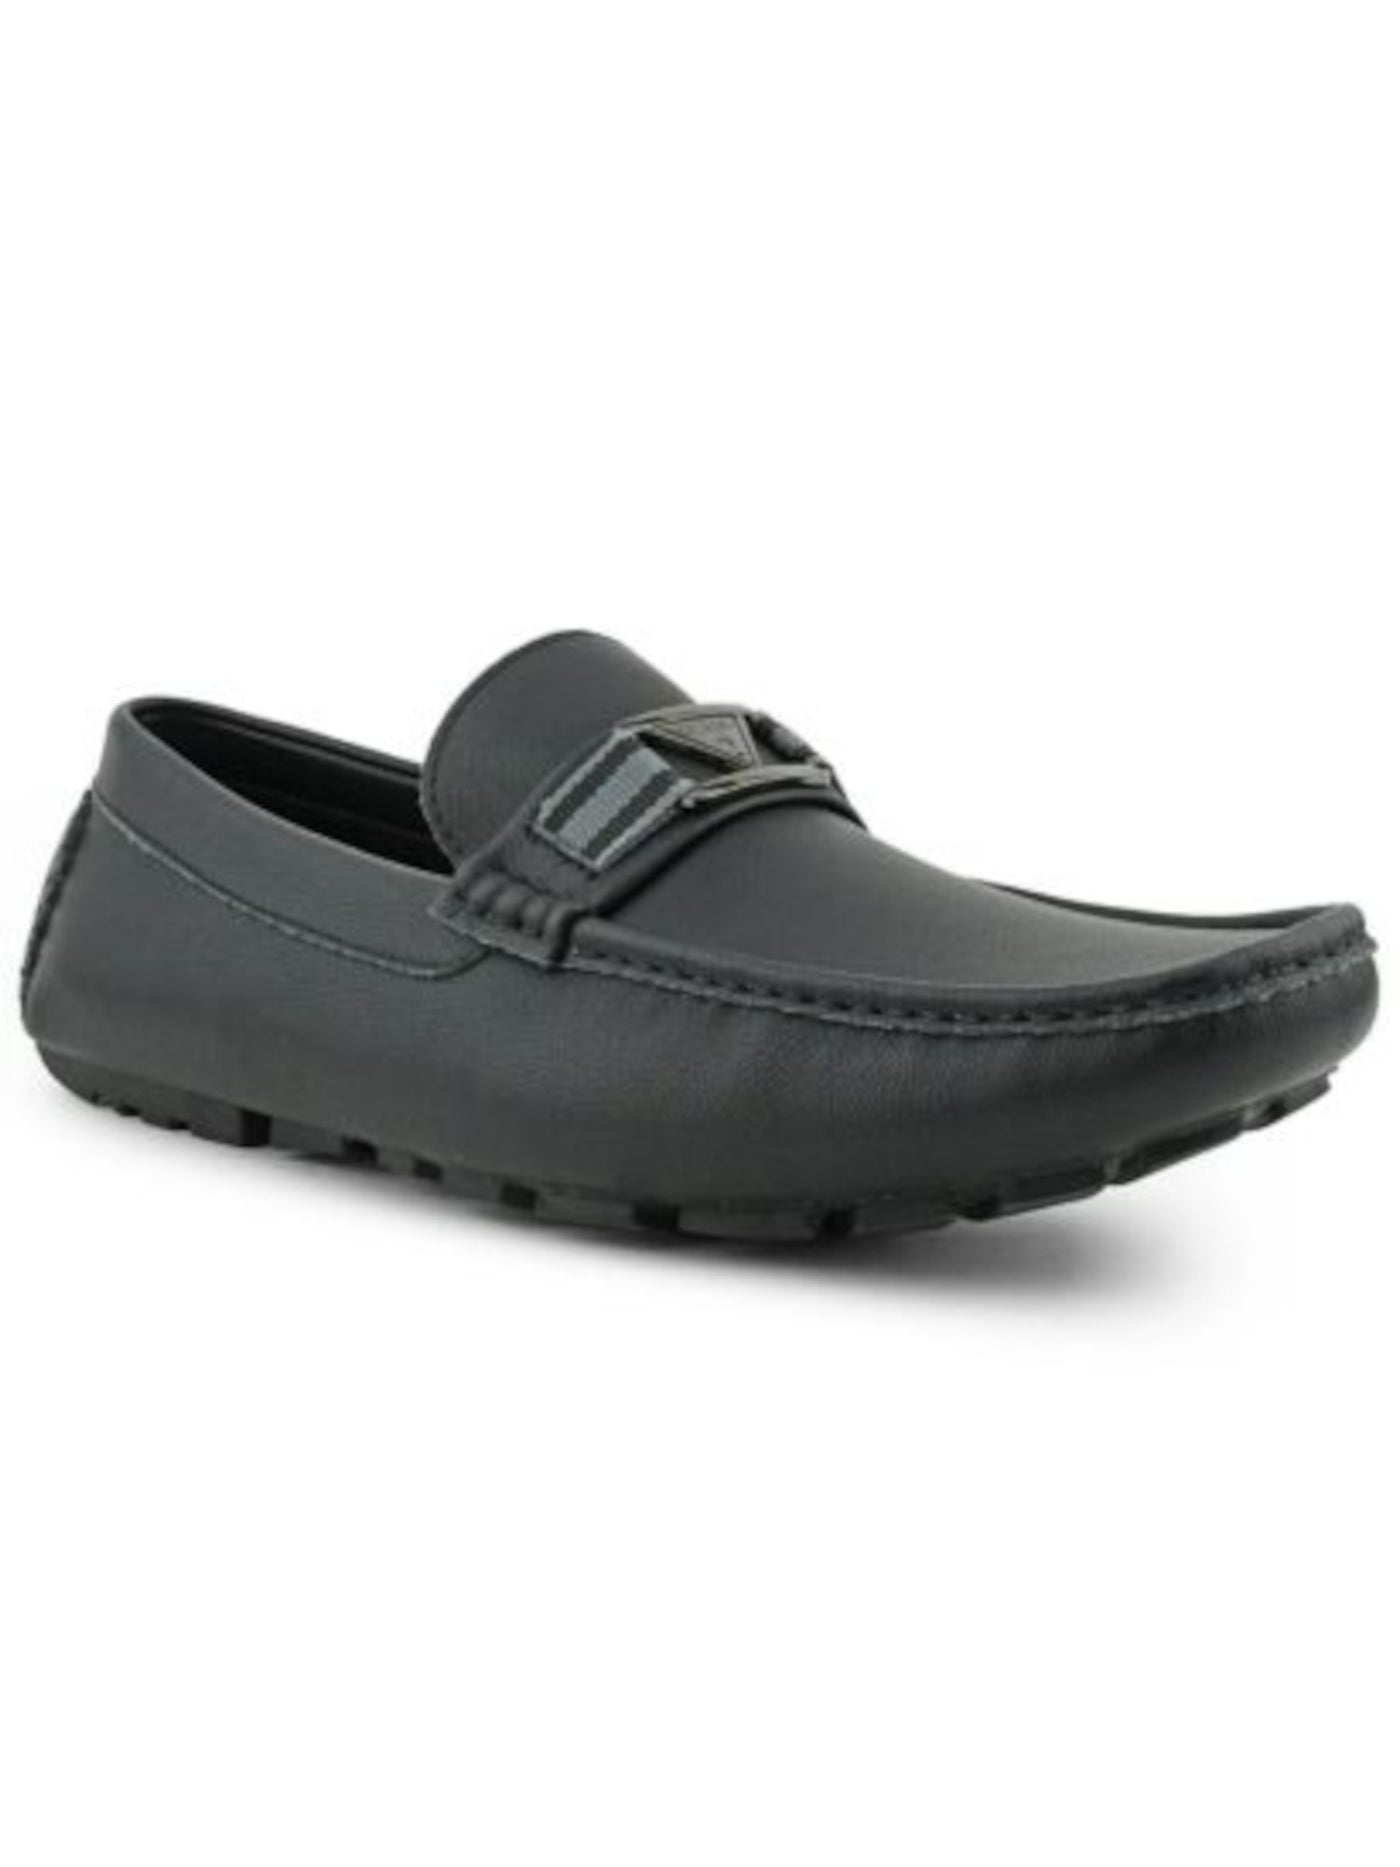 GUESS Mens Black Comfort Logo Art Square Toe Slip On Loafers Shoes 9.5